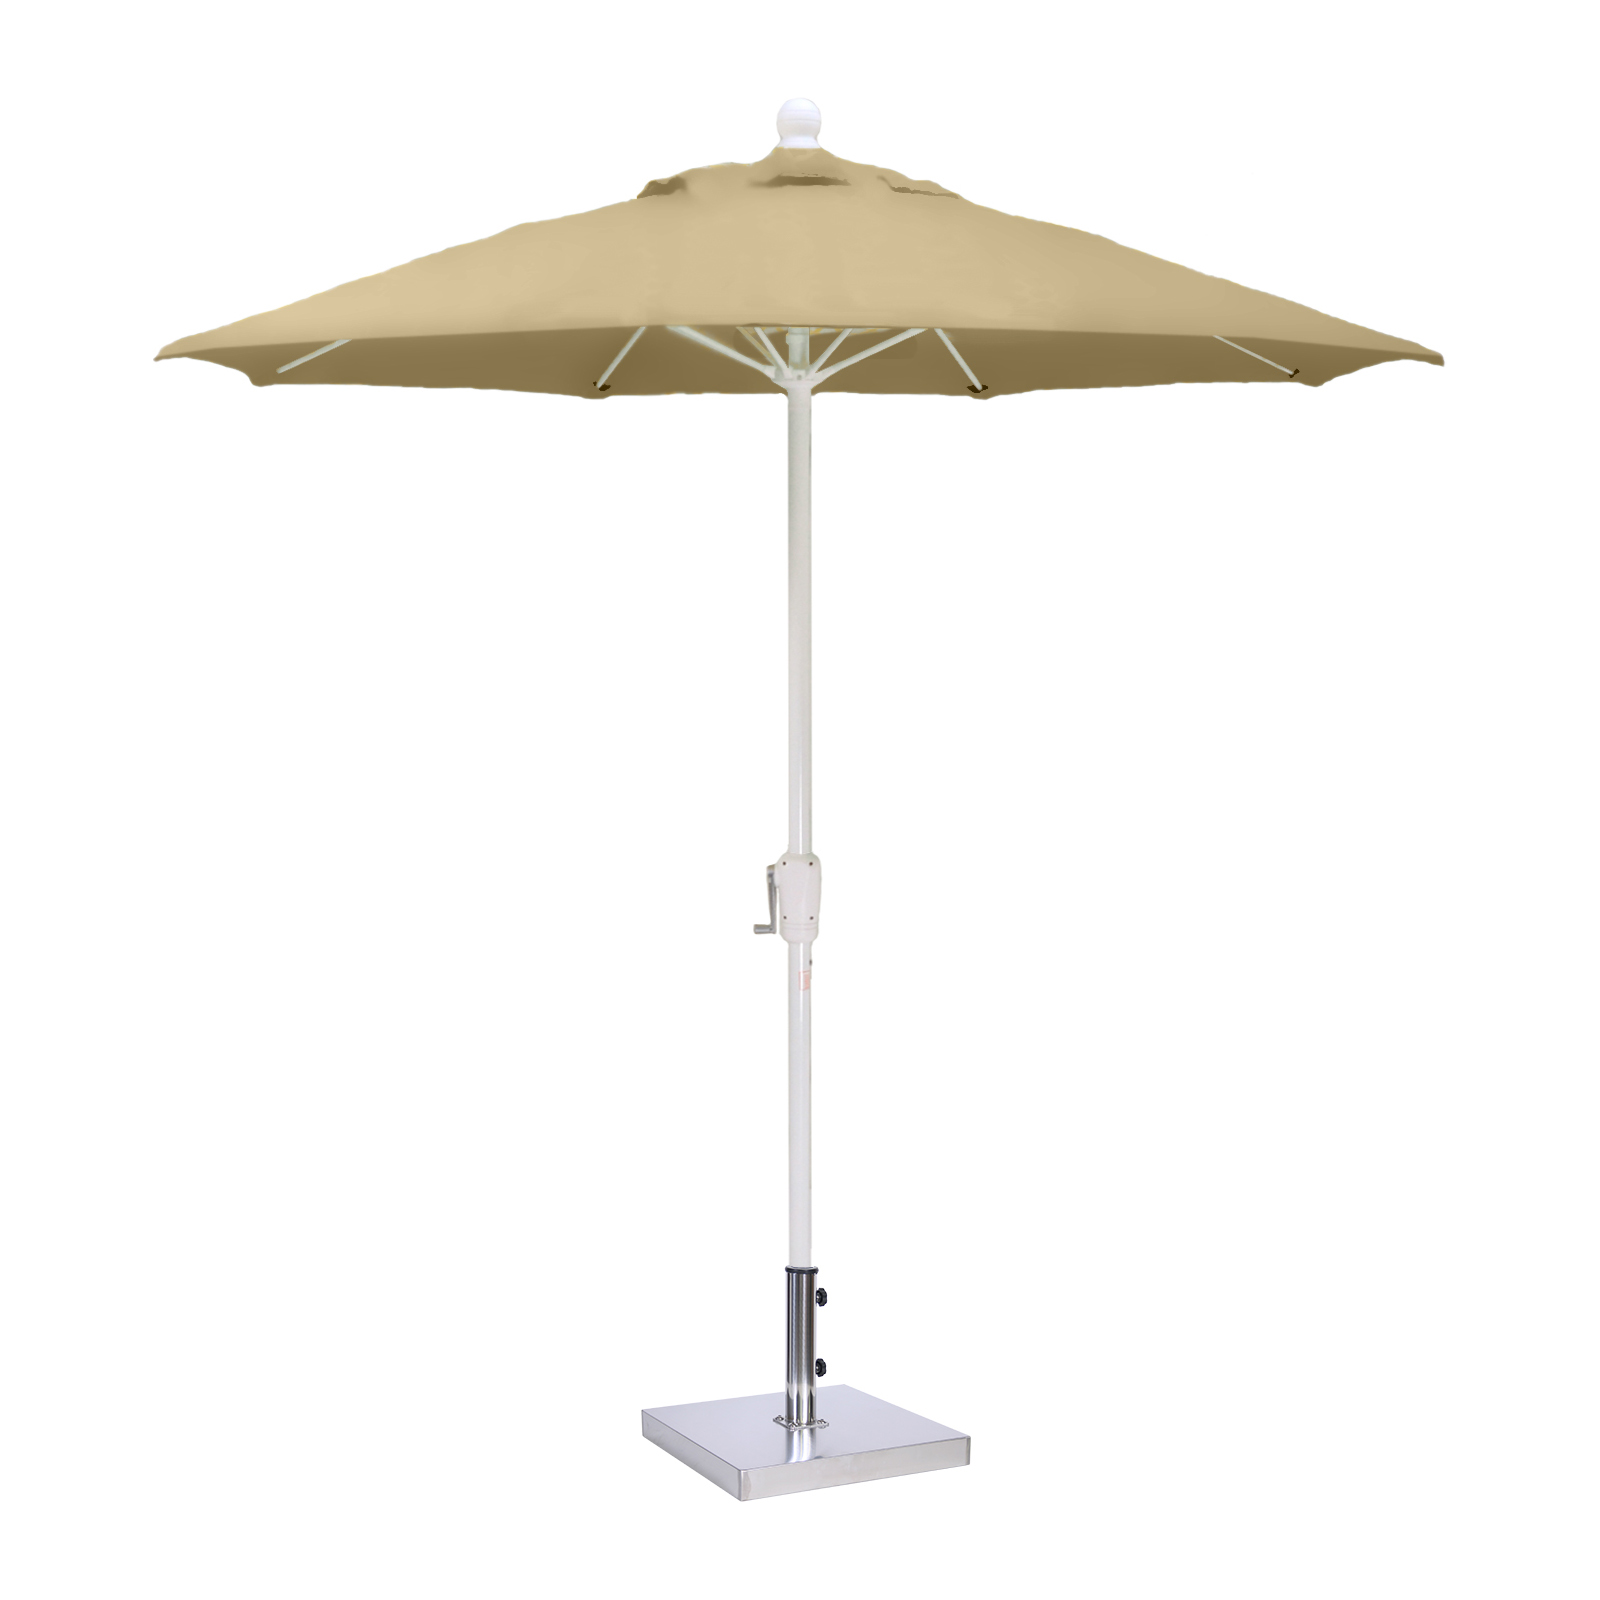 MiYu Furniture  7.5 ft Fiberglass Market Umbrella with Crank - White Frame